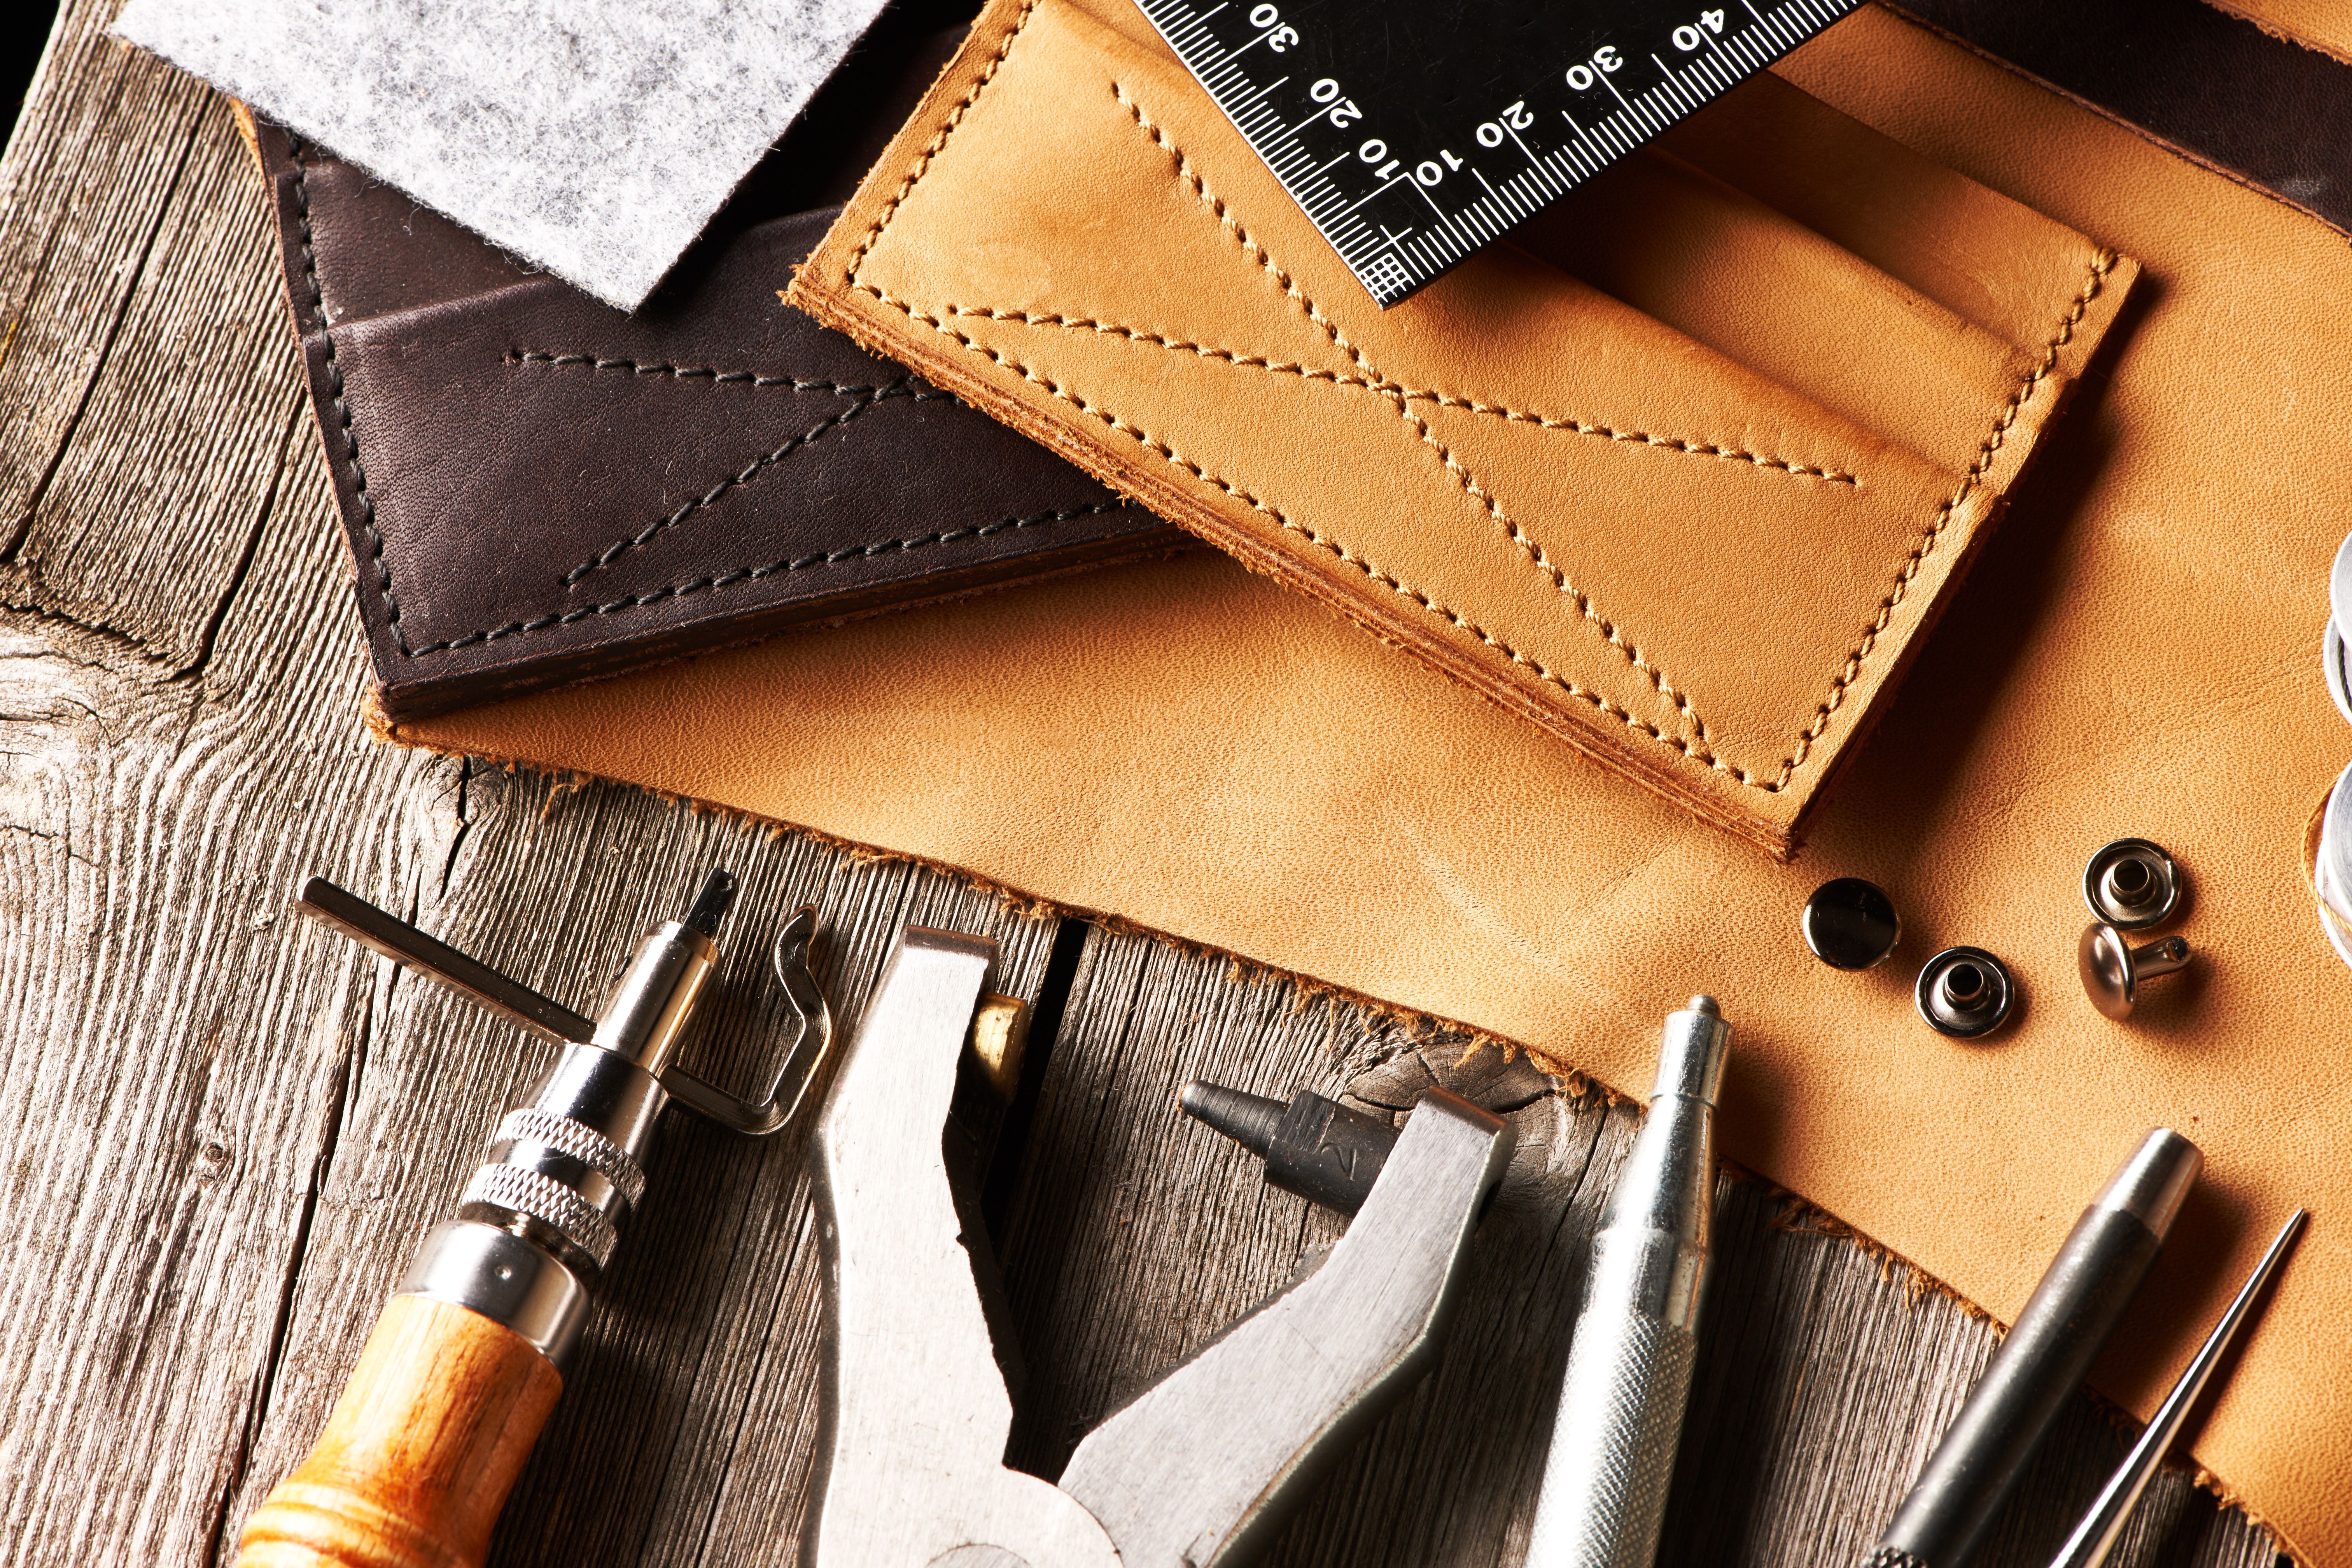 StecksStore Leather Work Tools